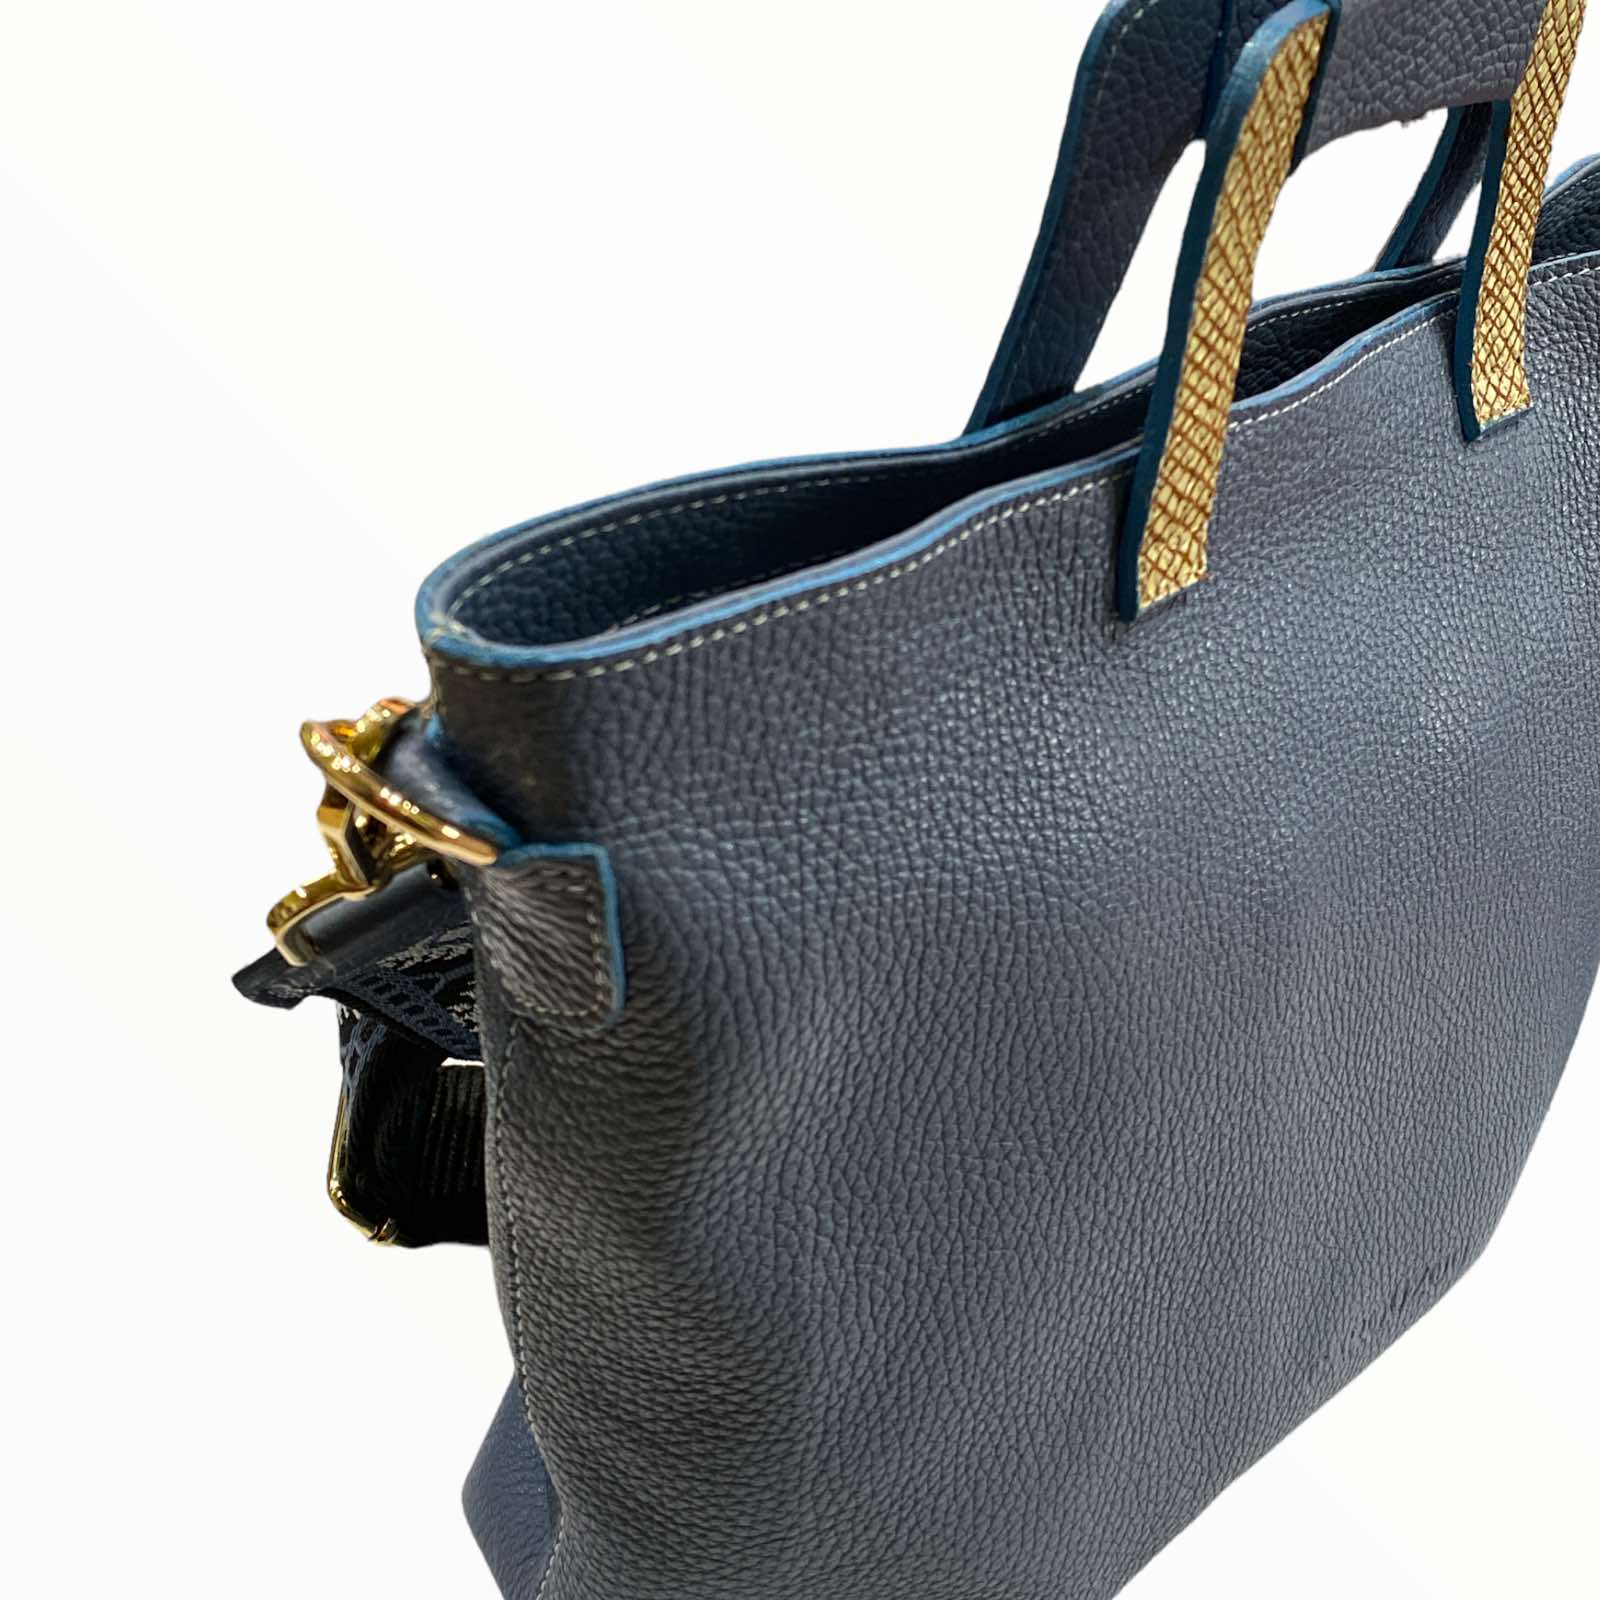 Raf blue leather tote bag